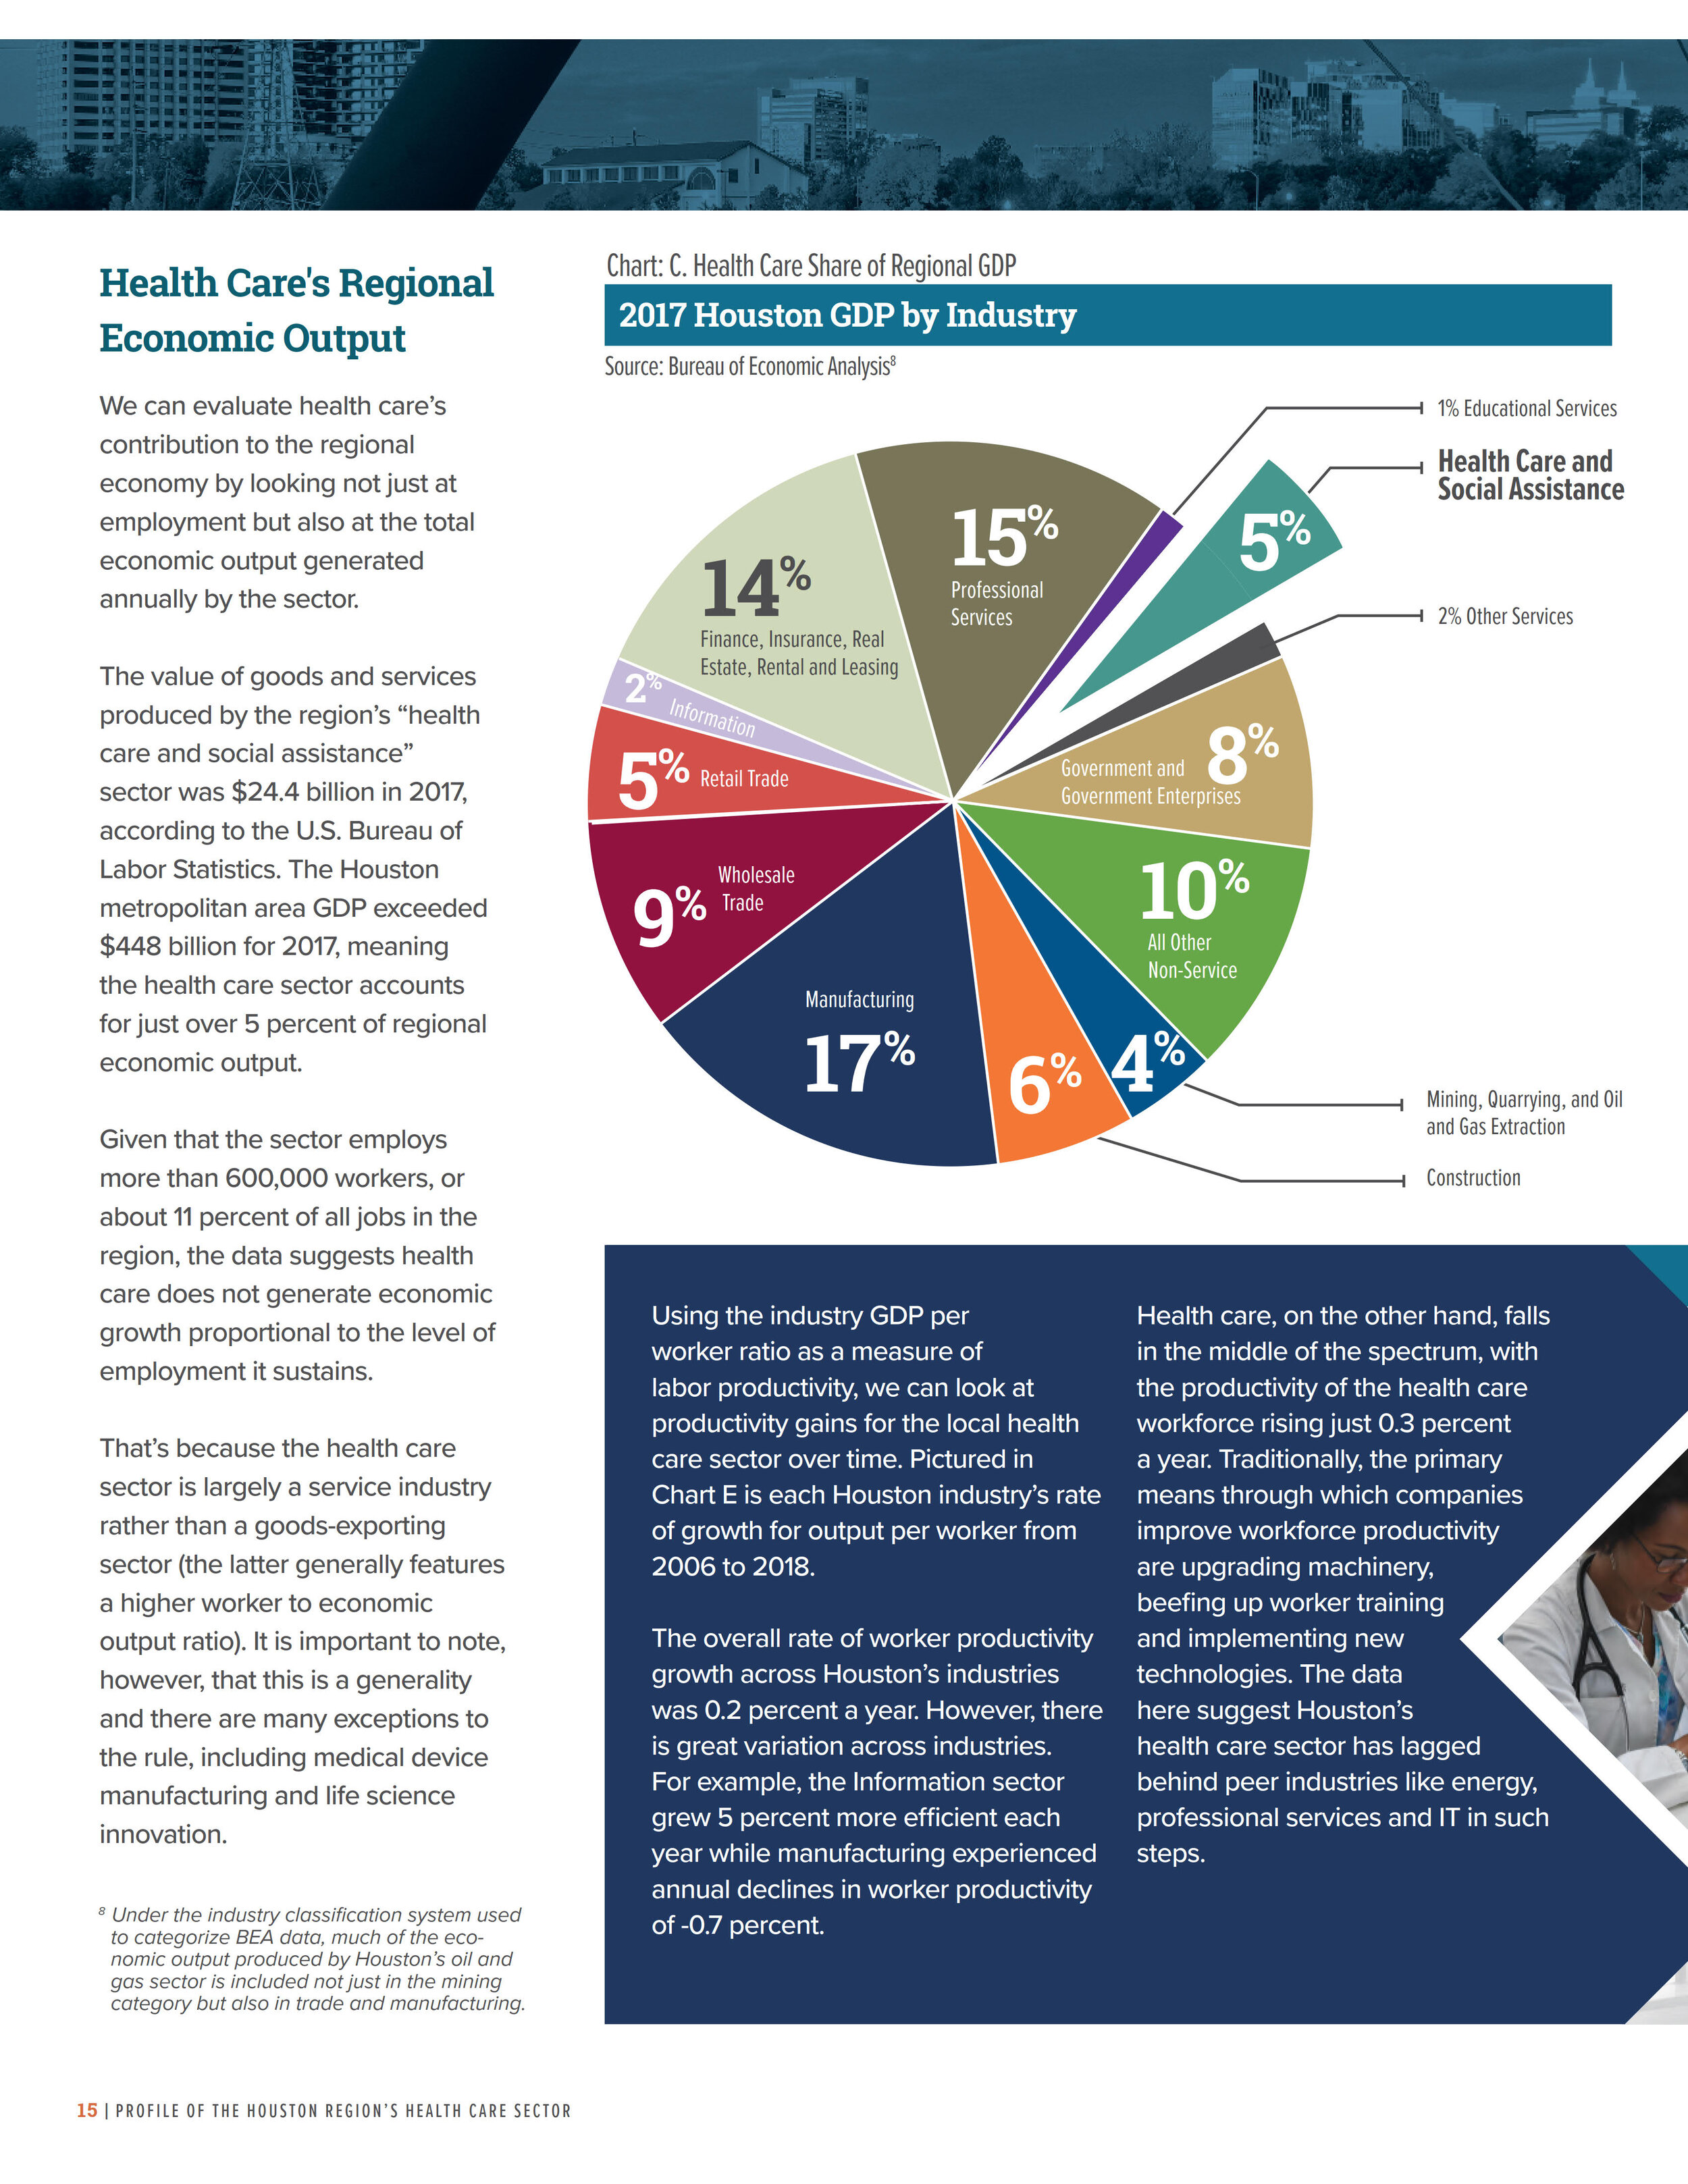 Health Care Report16.jpg